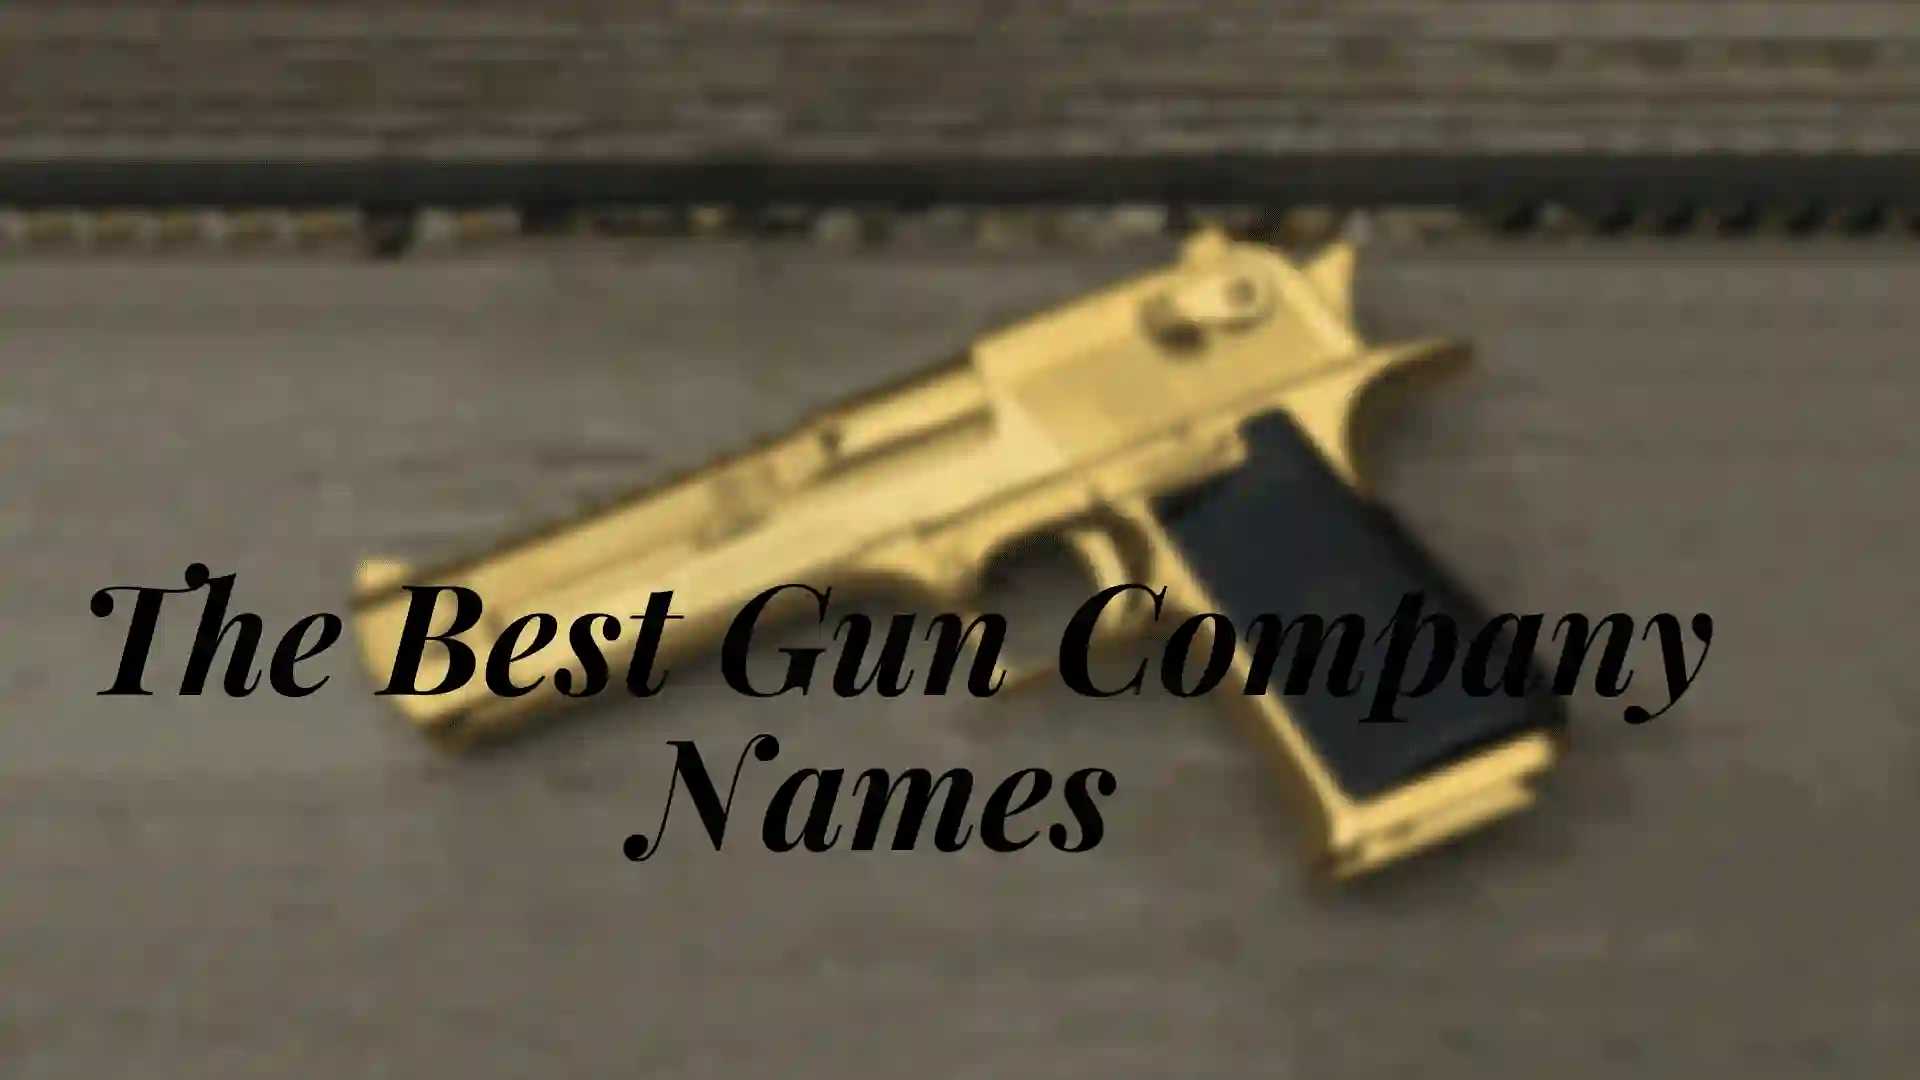 The Best Gun Company Names